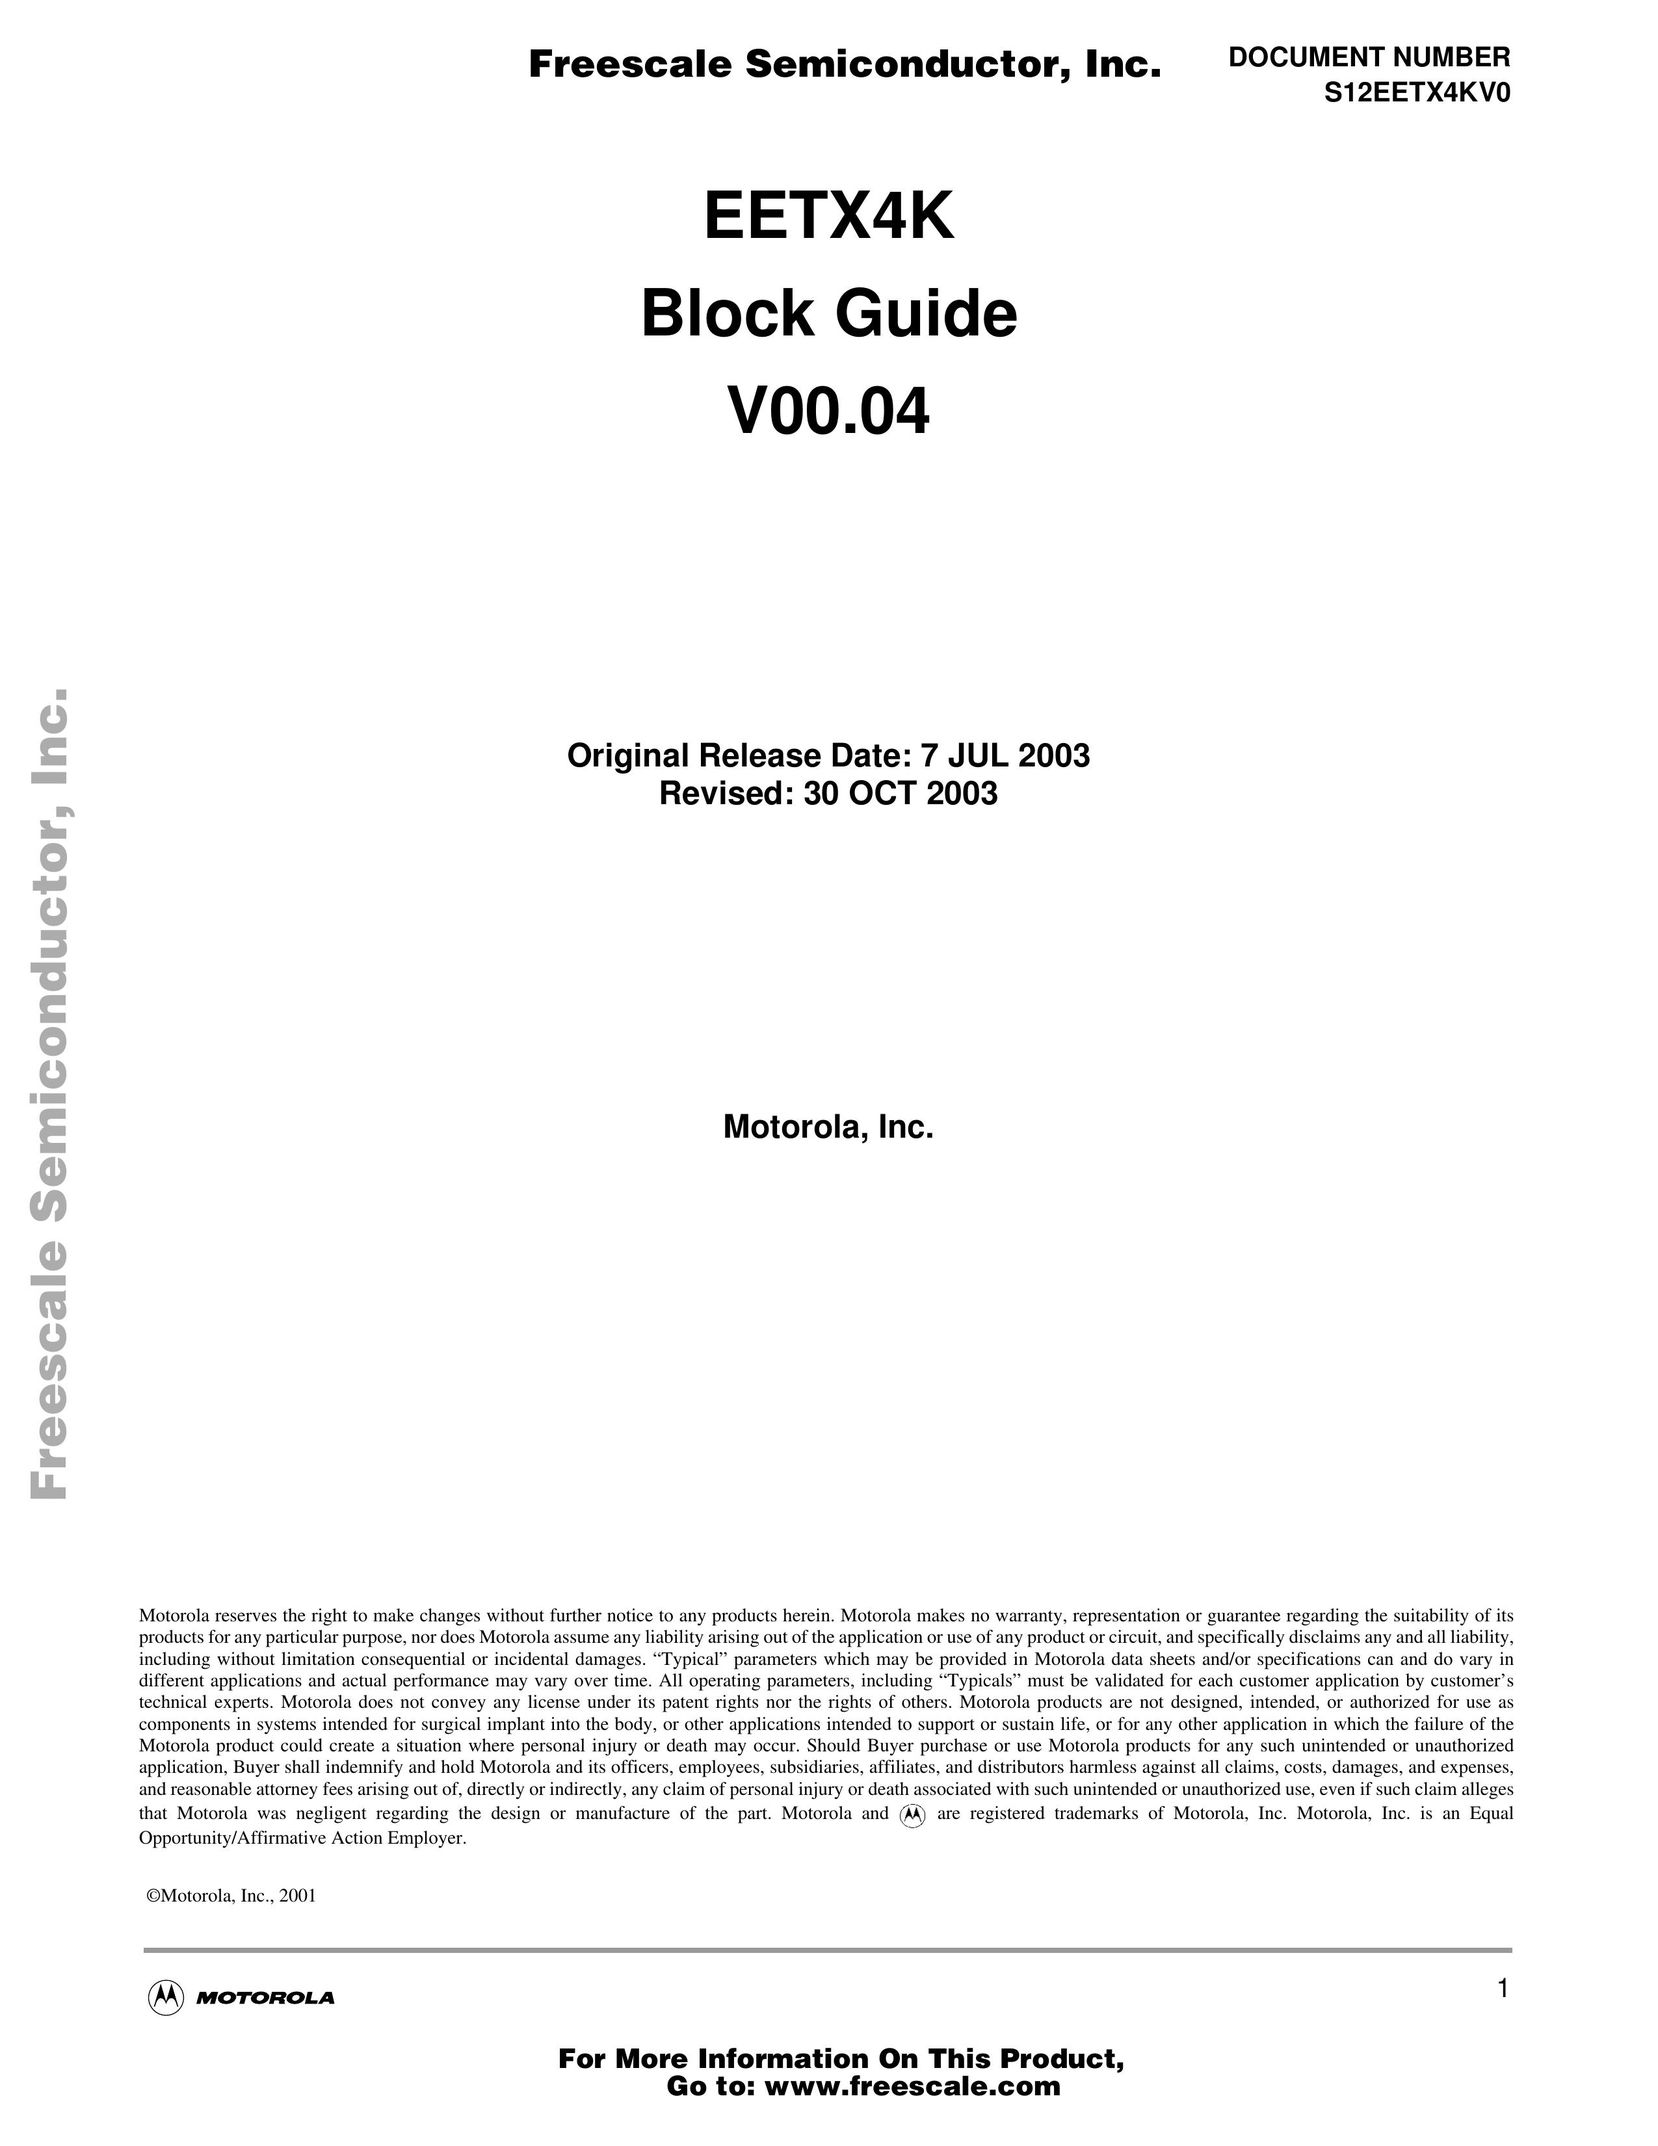 Freescale Semiconductor Block Guide Computer Accessories User Manual